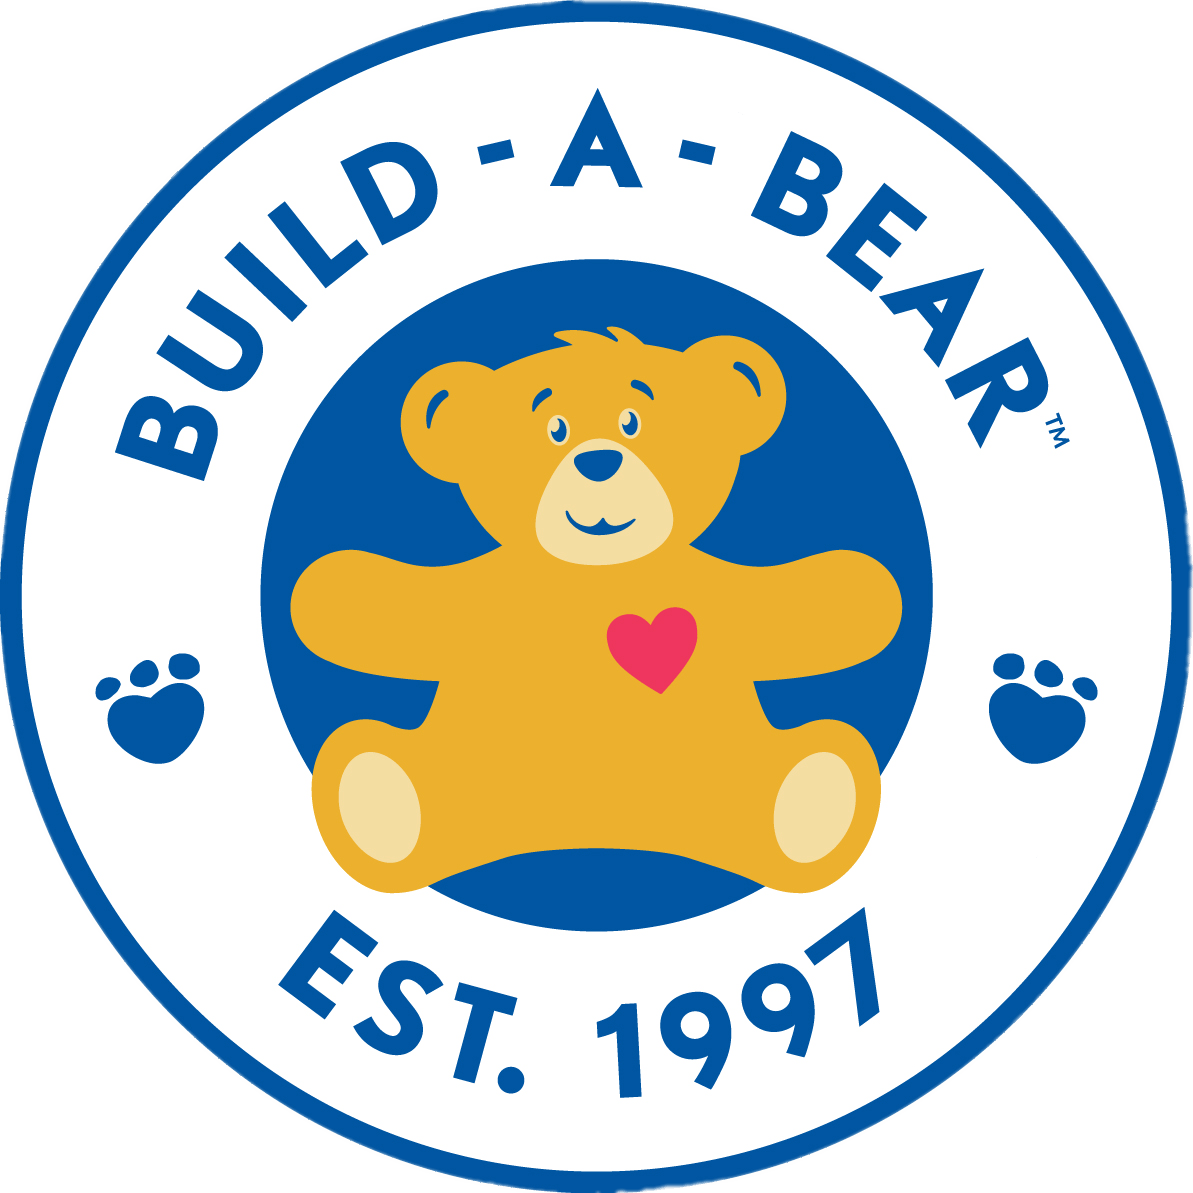 Build A Bear Workshop Inc